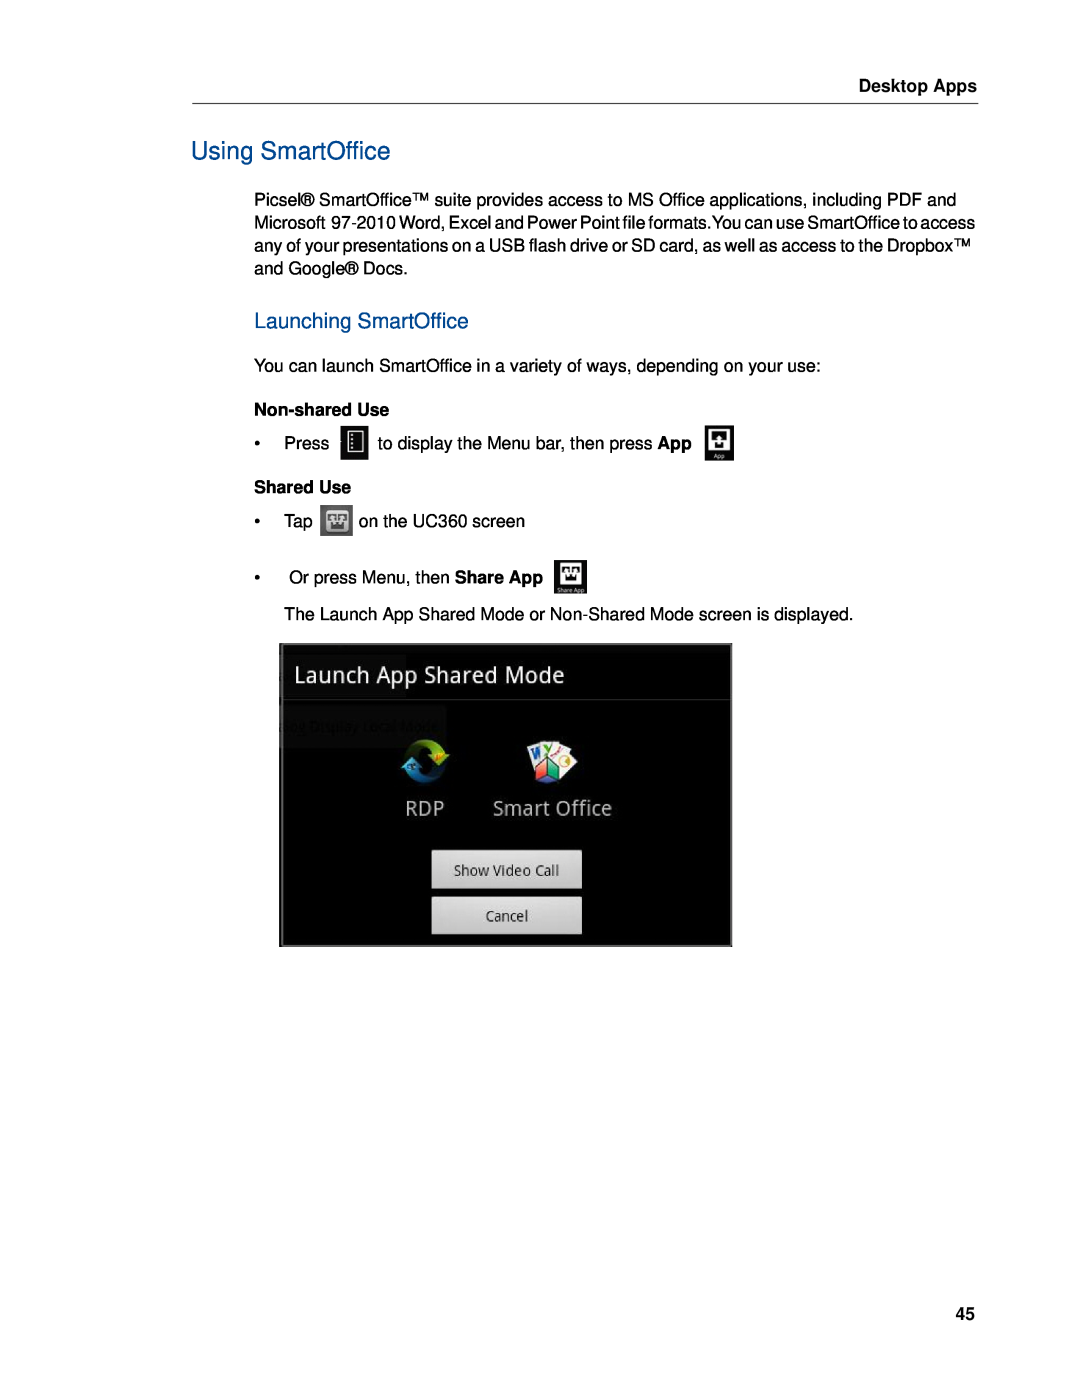 Mitel UC360 manual Using SmartOffice, Launching SmartOffice, Non-shared Use, Shared Use, Desktop Apps 